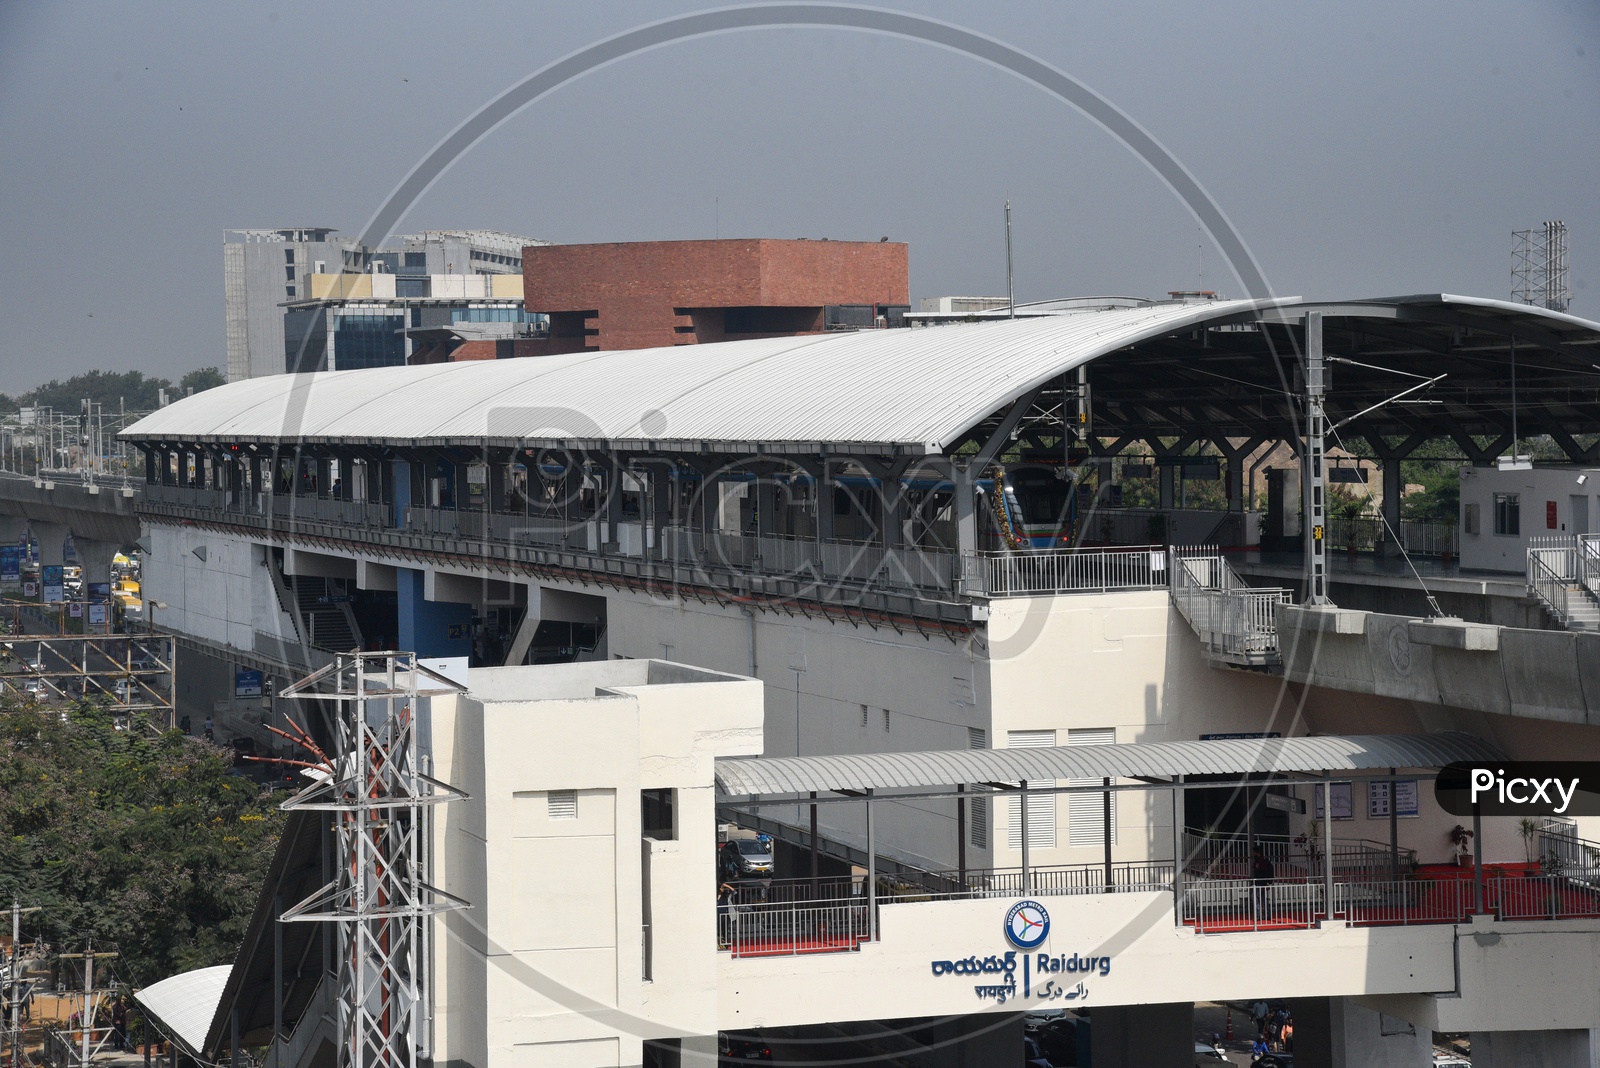 Raidurg Metro Station Opened to Public on 29th November 2019